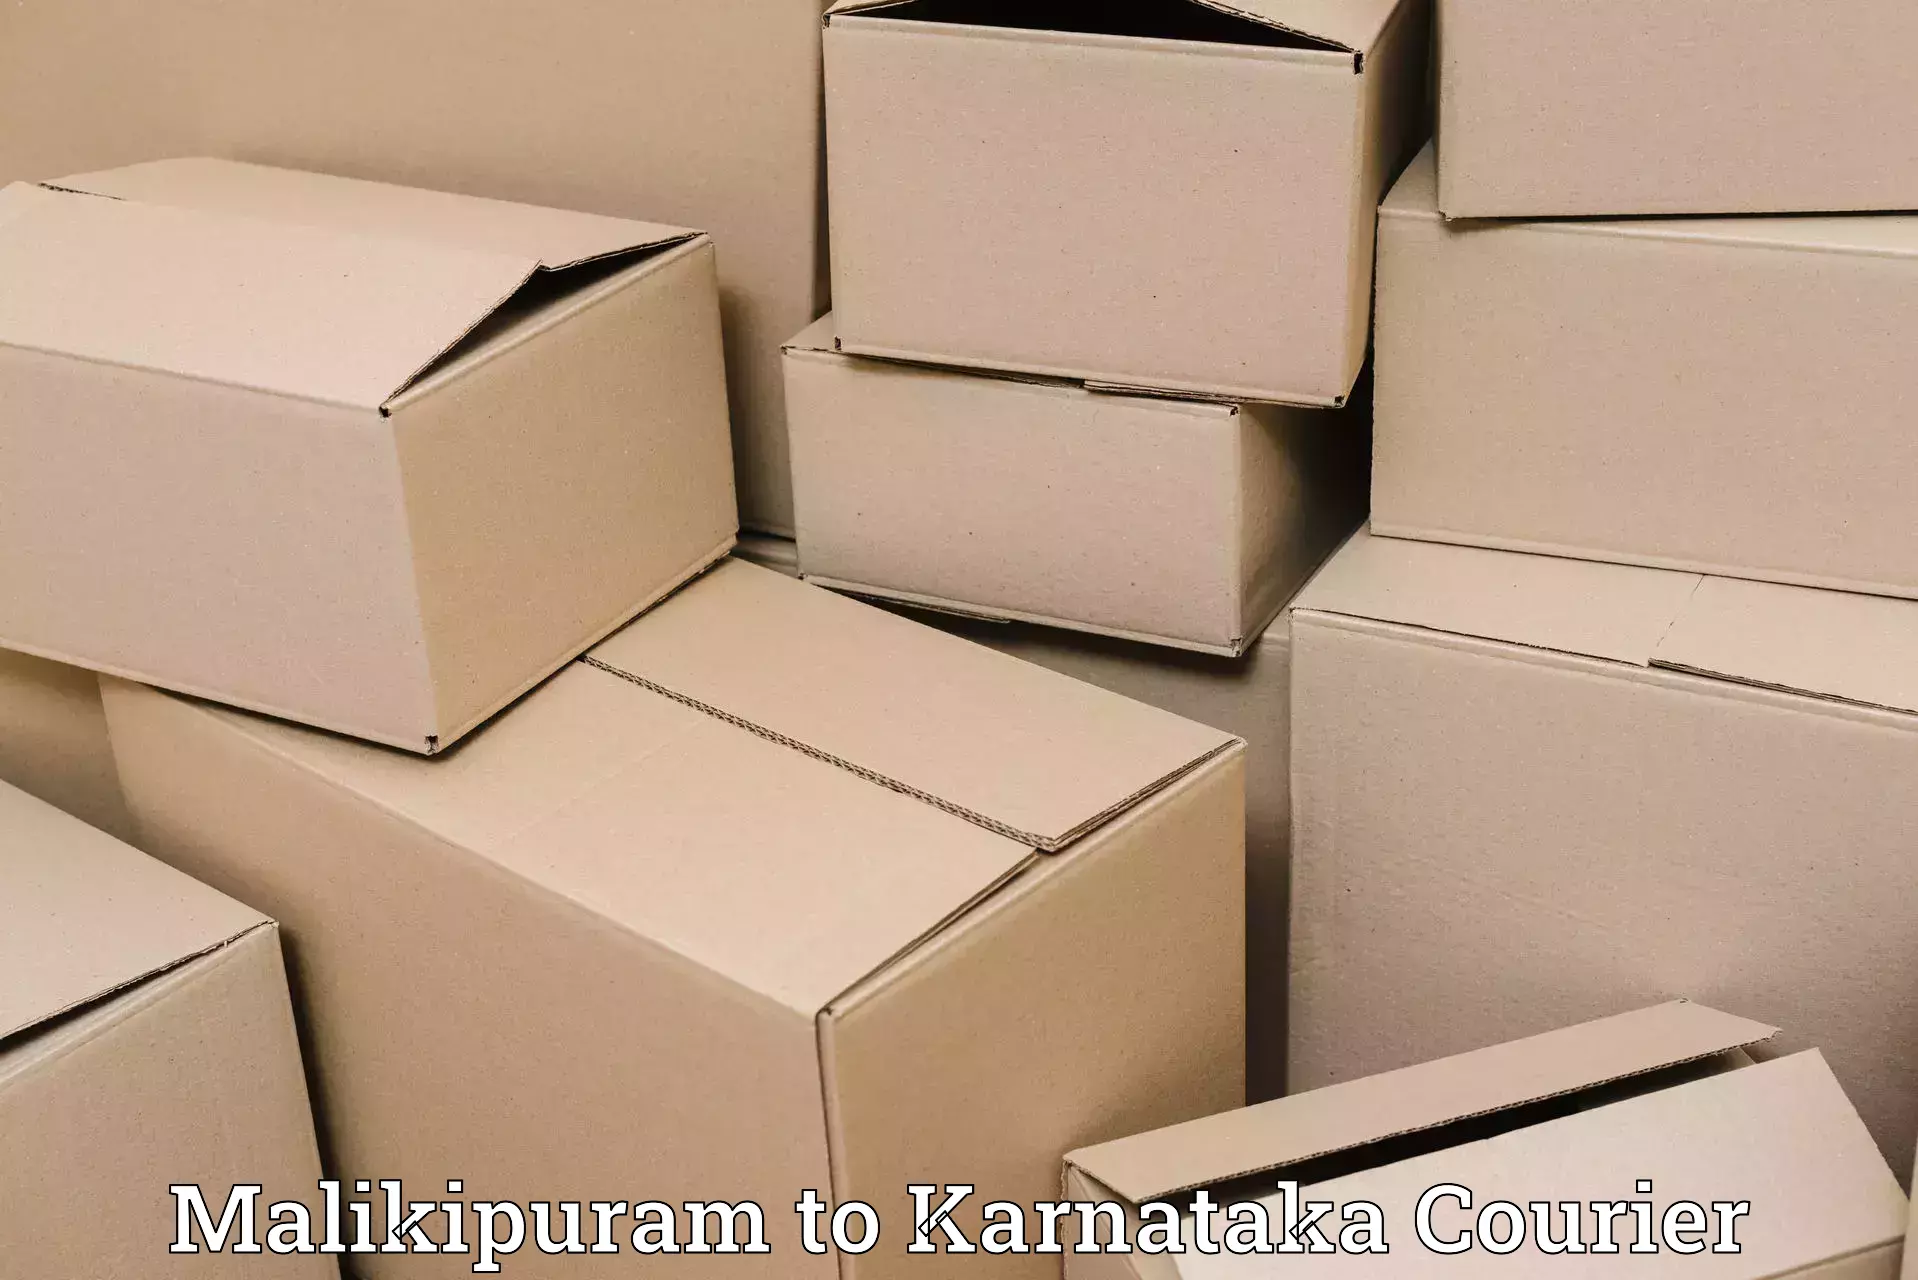 Parcel service for businesses Malikipuram to Karnataka